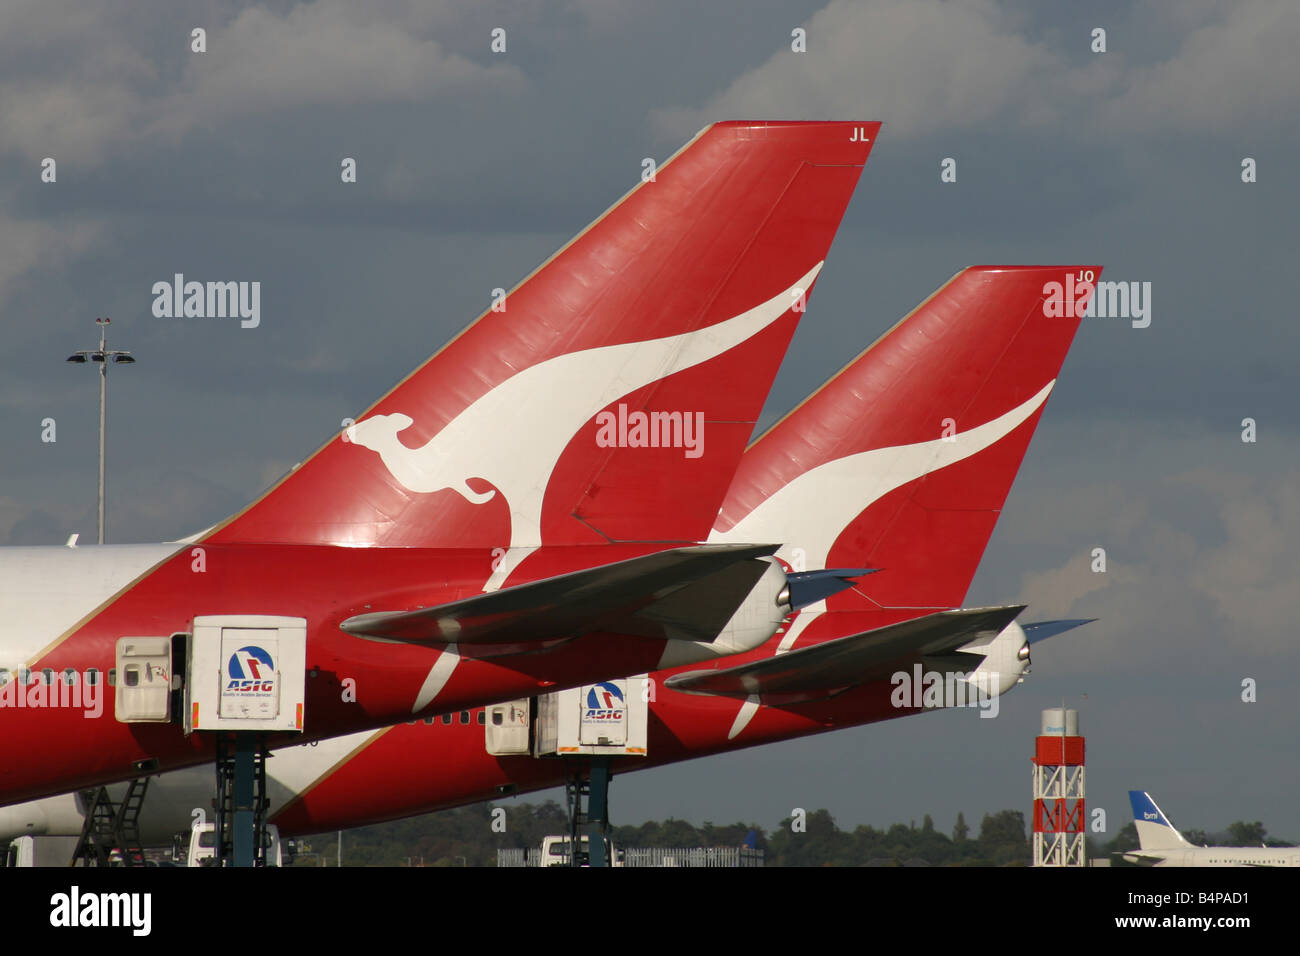 QANTAS AUSTRALIAN AIRLINES Stock Photo